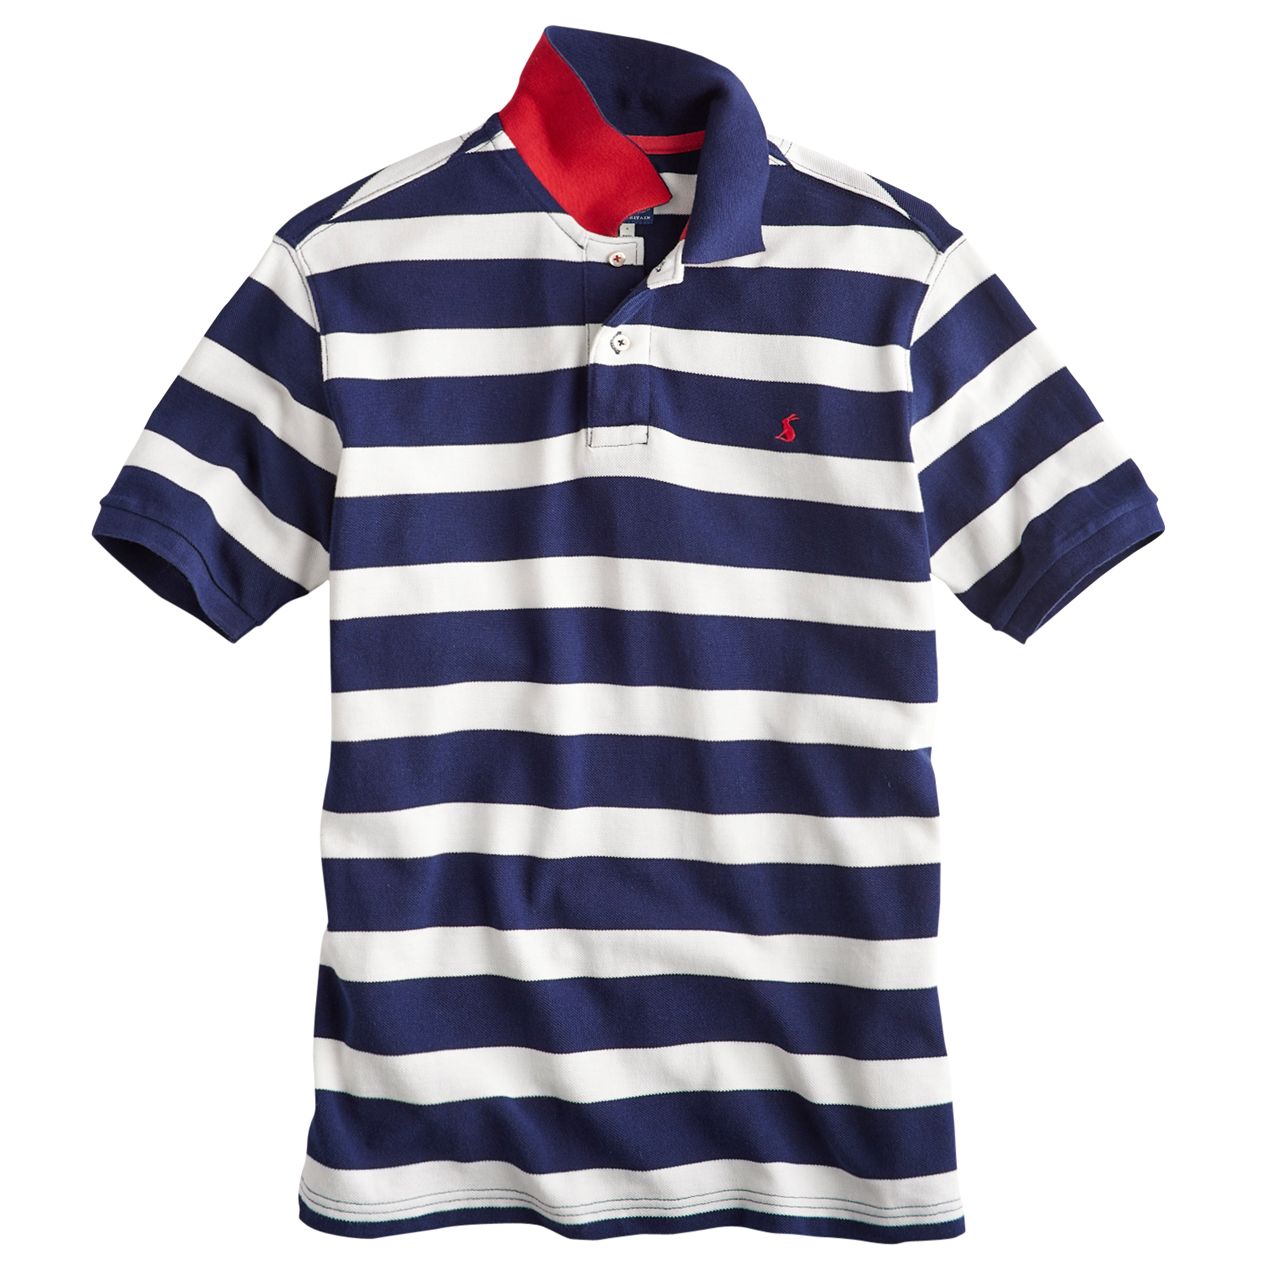 Buy Joules Filbert Block Stripe Polo Shirt Online at johnlewis.com